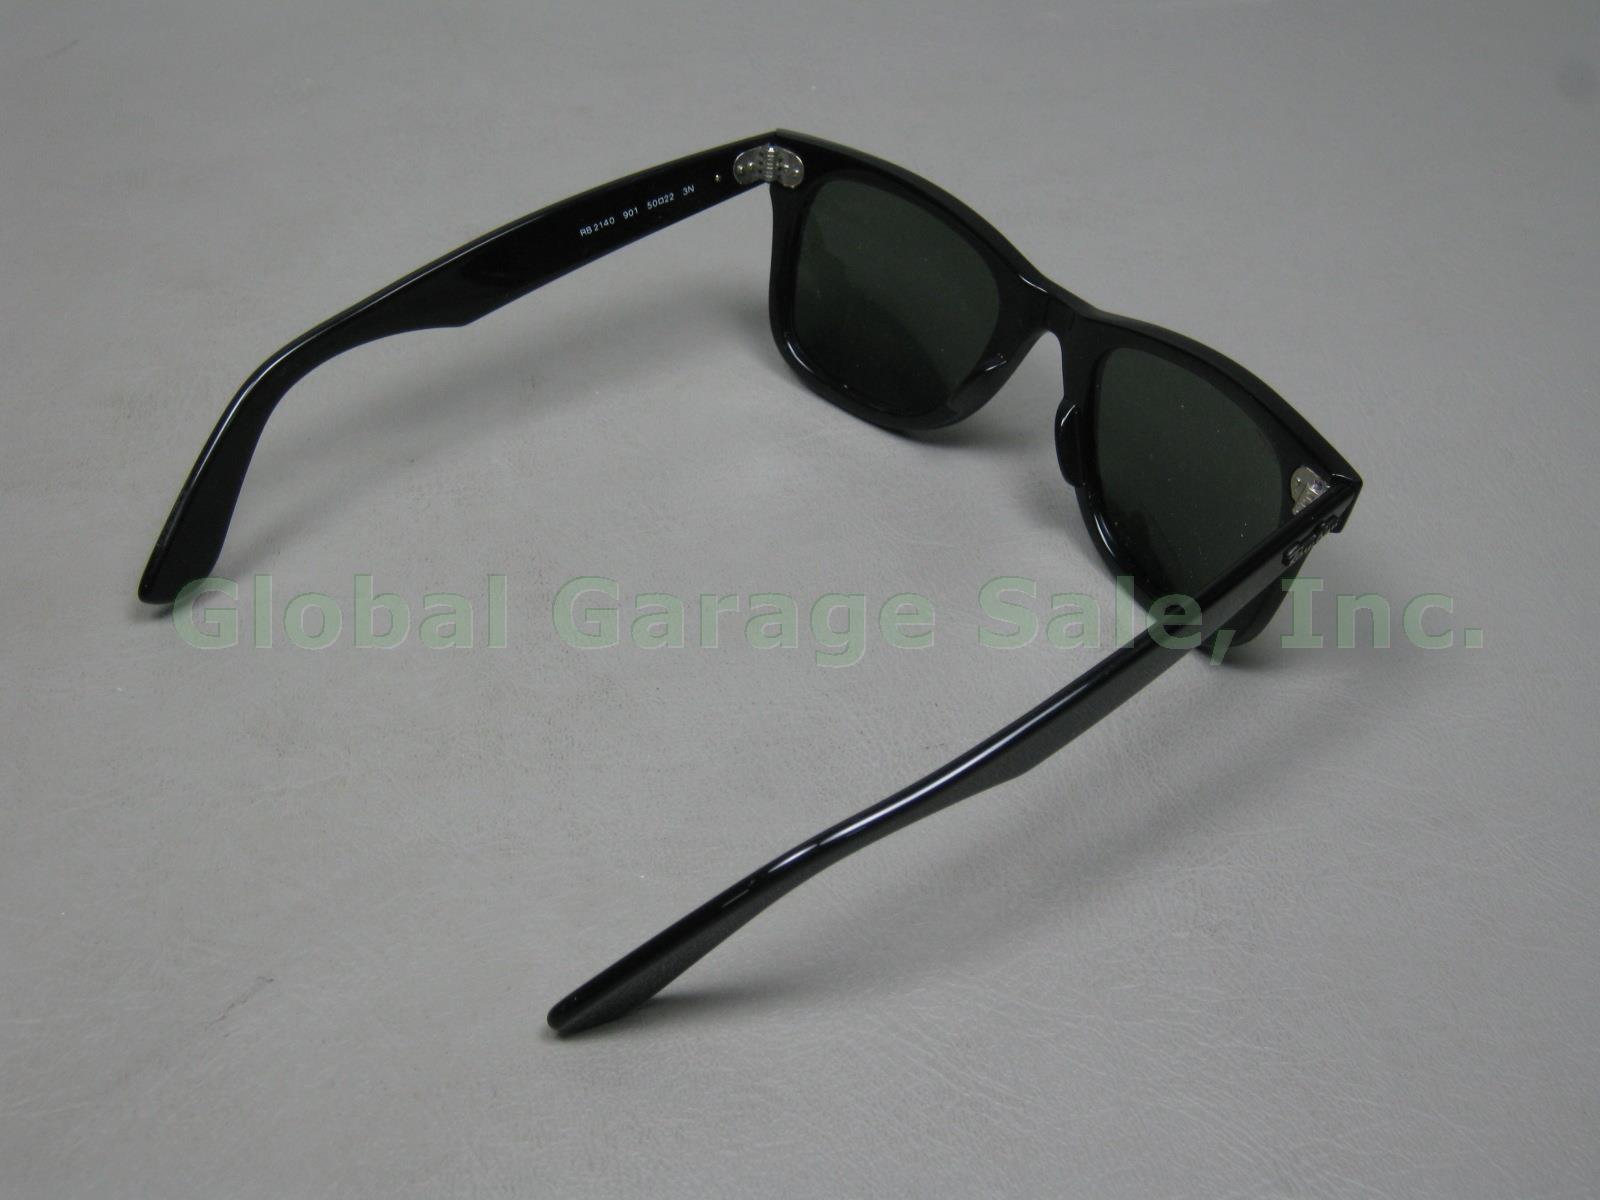 NOS Black Ray Ban Original Wayfarer Classics RB2140 Sunglasses + Case Bundle Lot 3